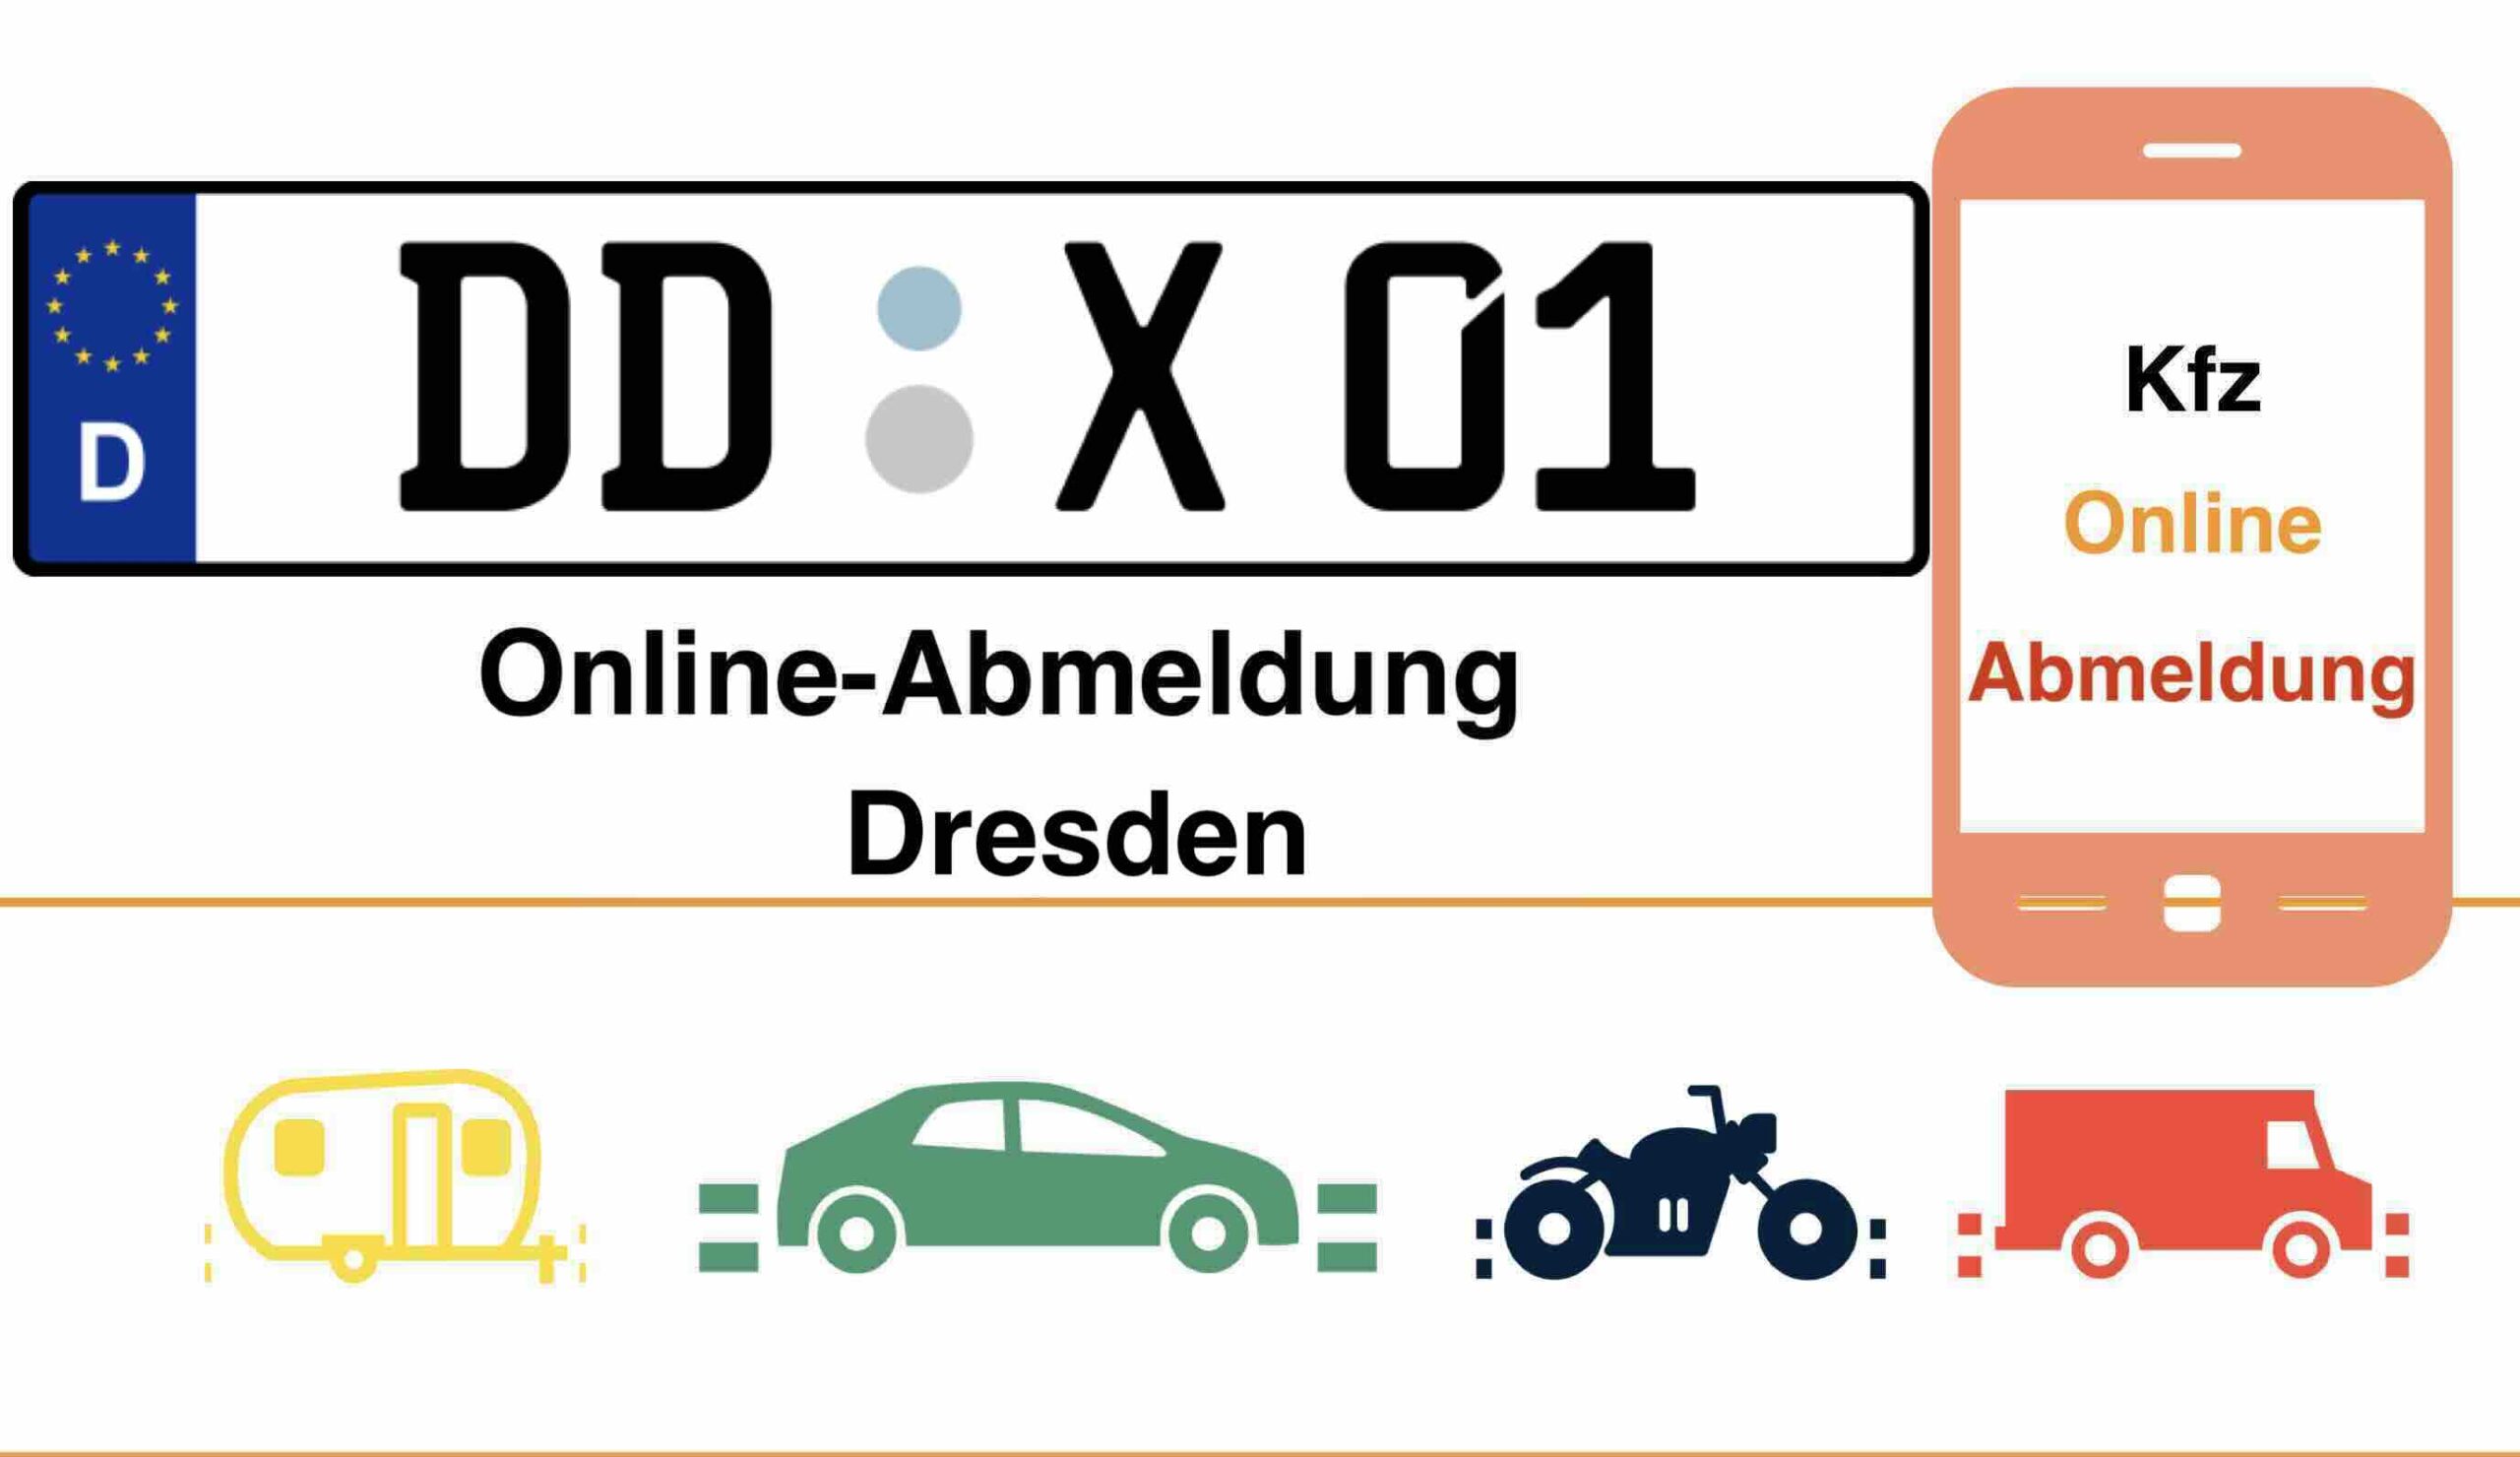 Online-Abmeldung in Dresden 